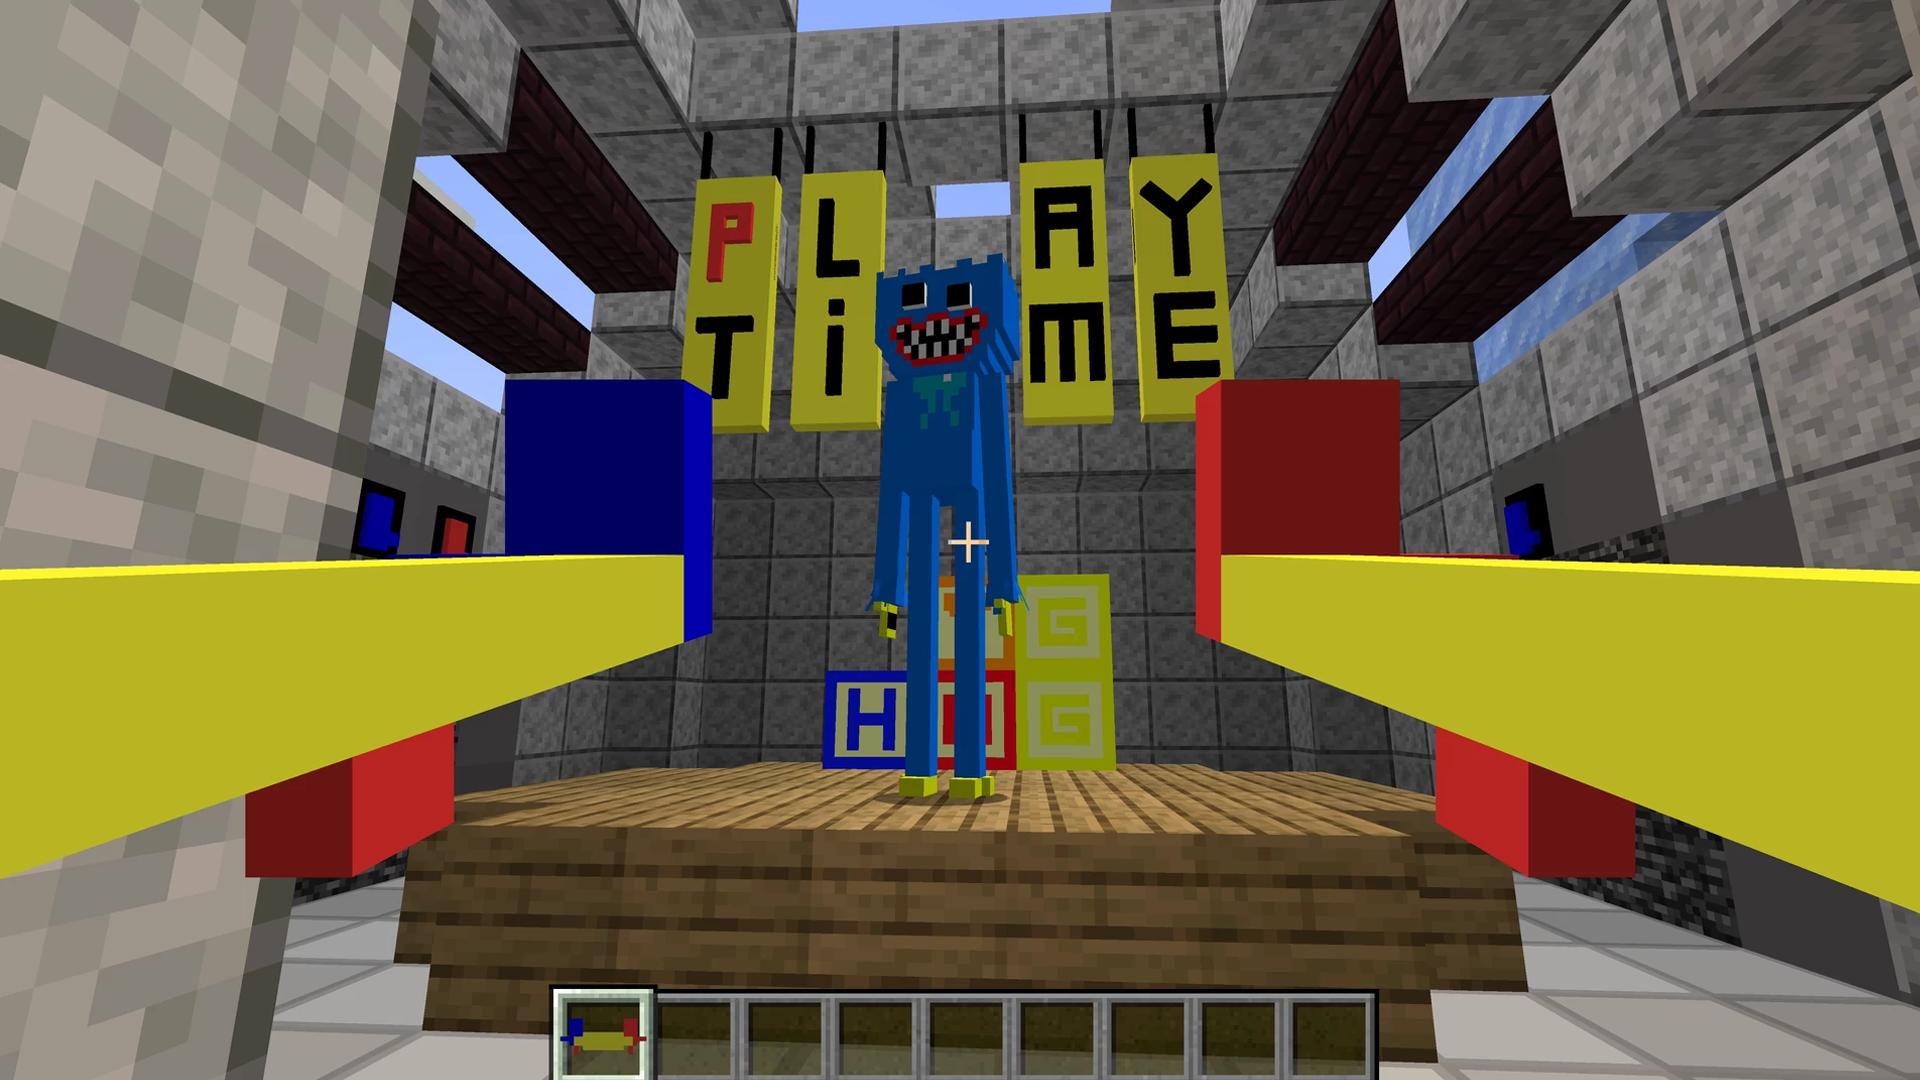 Poppy Playtime Chapter 2 Addon Minecraft Mod